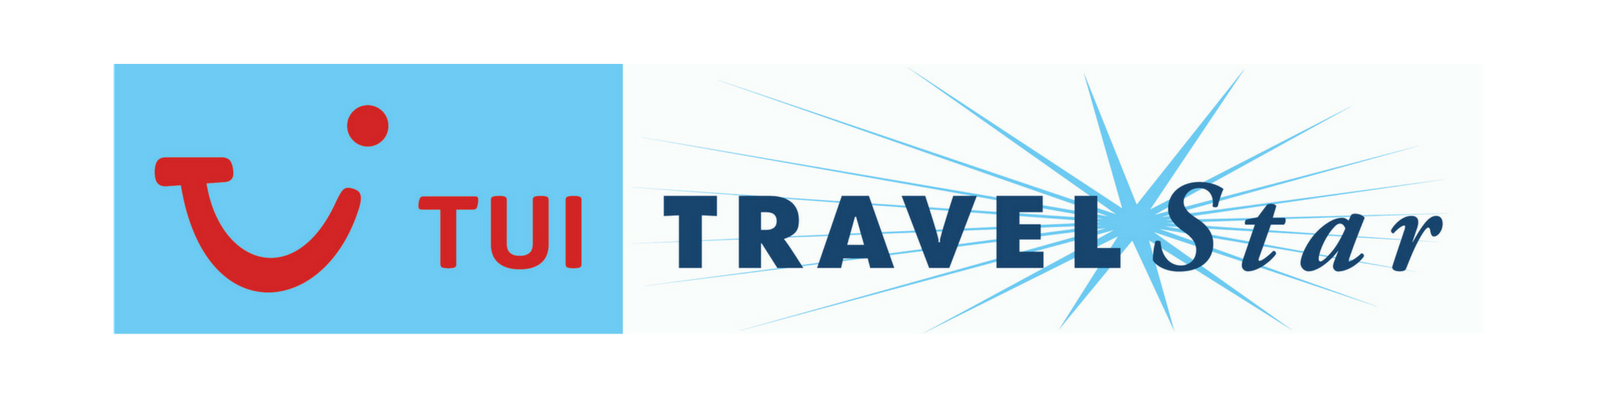 TUI-Travel-Star-logo.png